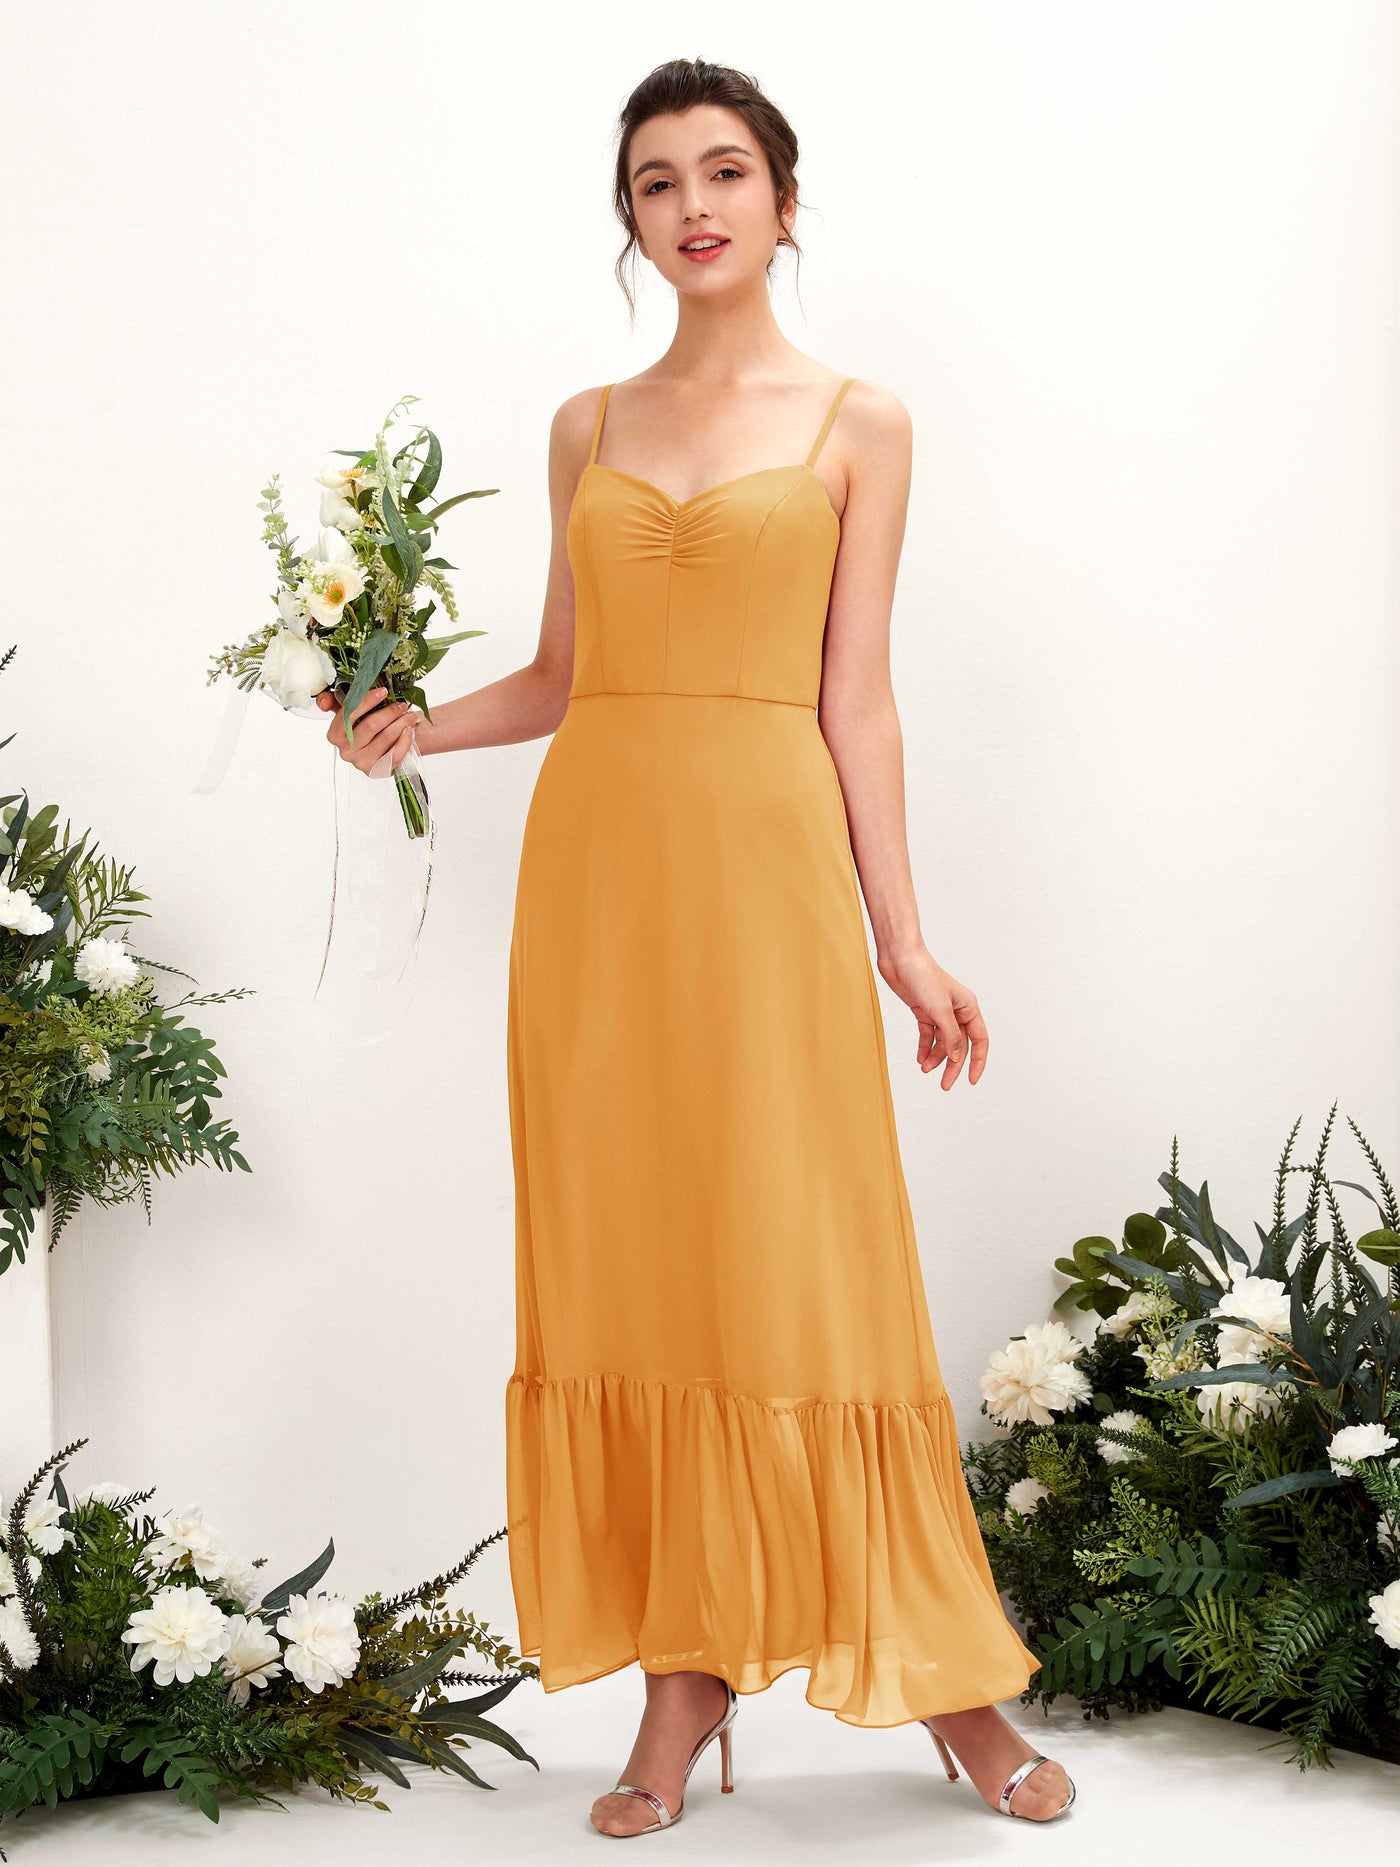 Mango Bridesmaid Dresses Bridesmaid Dress Chiffon Spaghetti-straps Full Length Sleeveless Wedding Party Dress (81223002)#color_mango